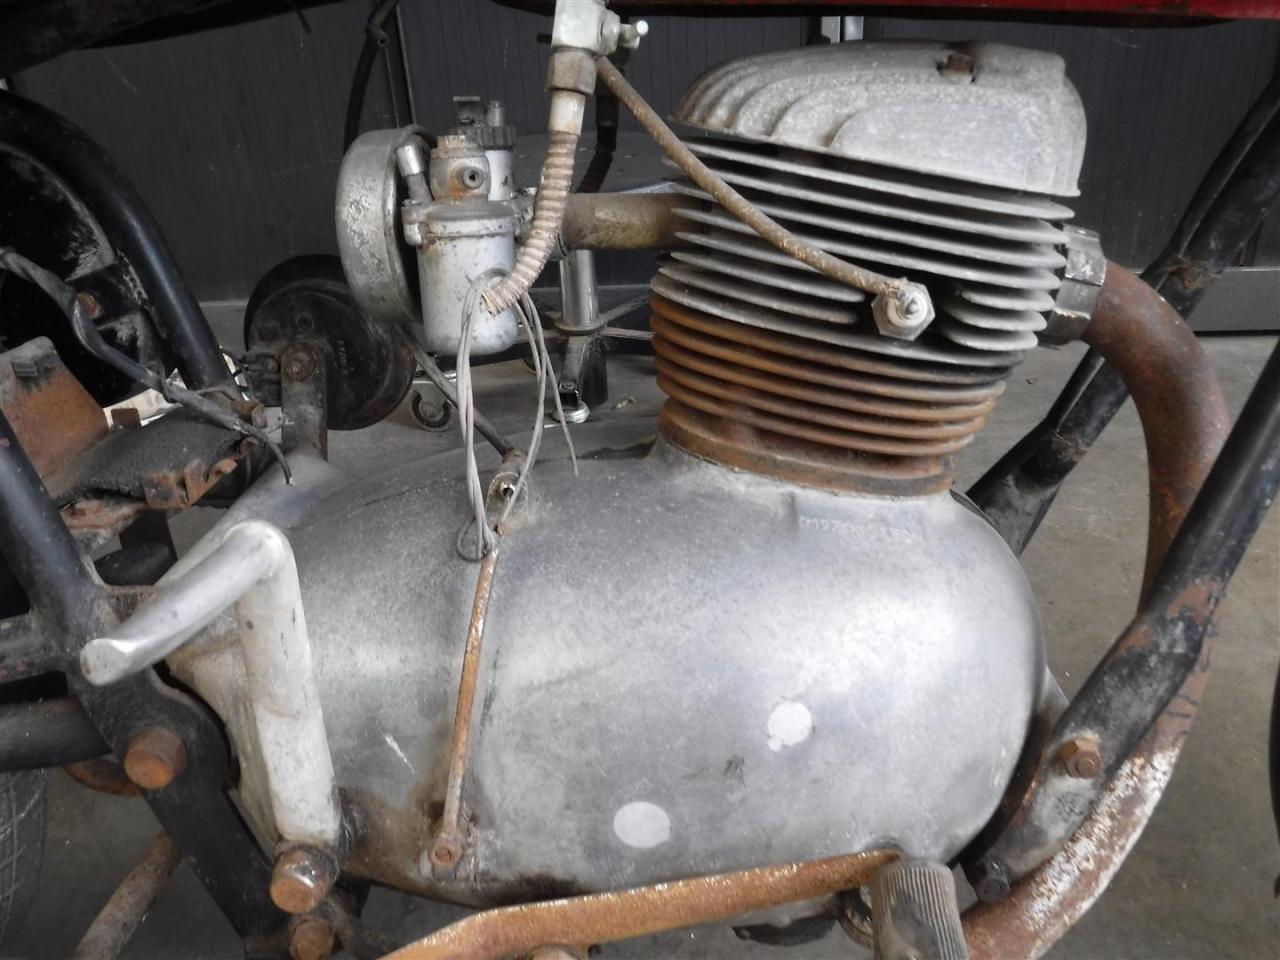 1959 Gilera 150 Sport to restore